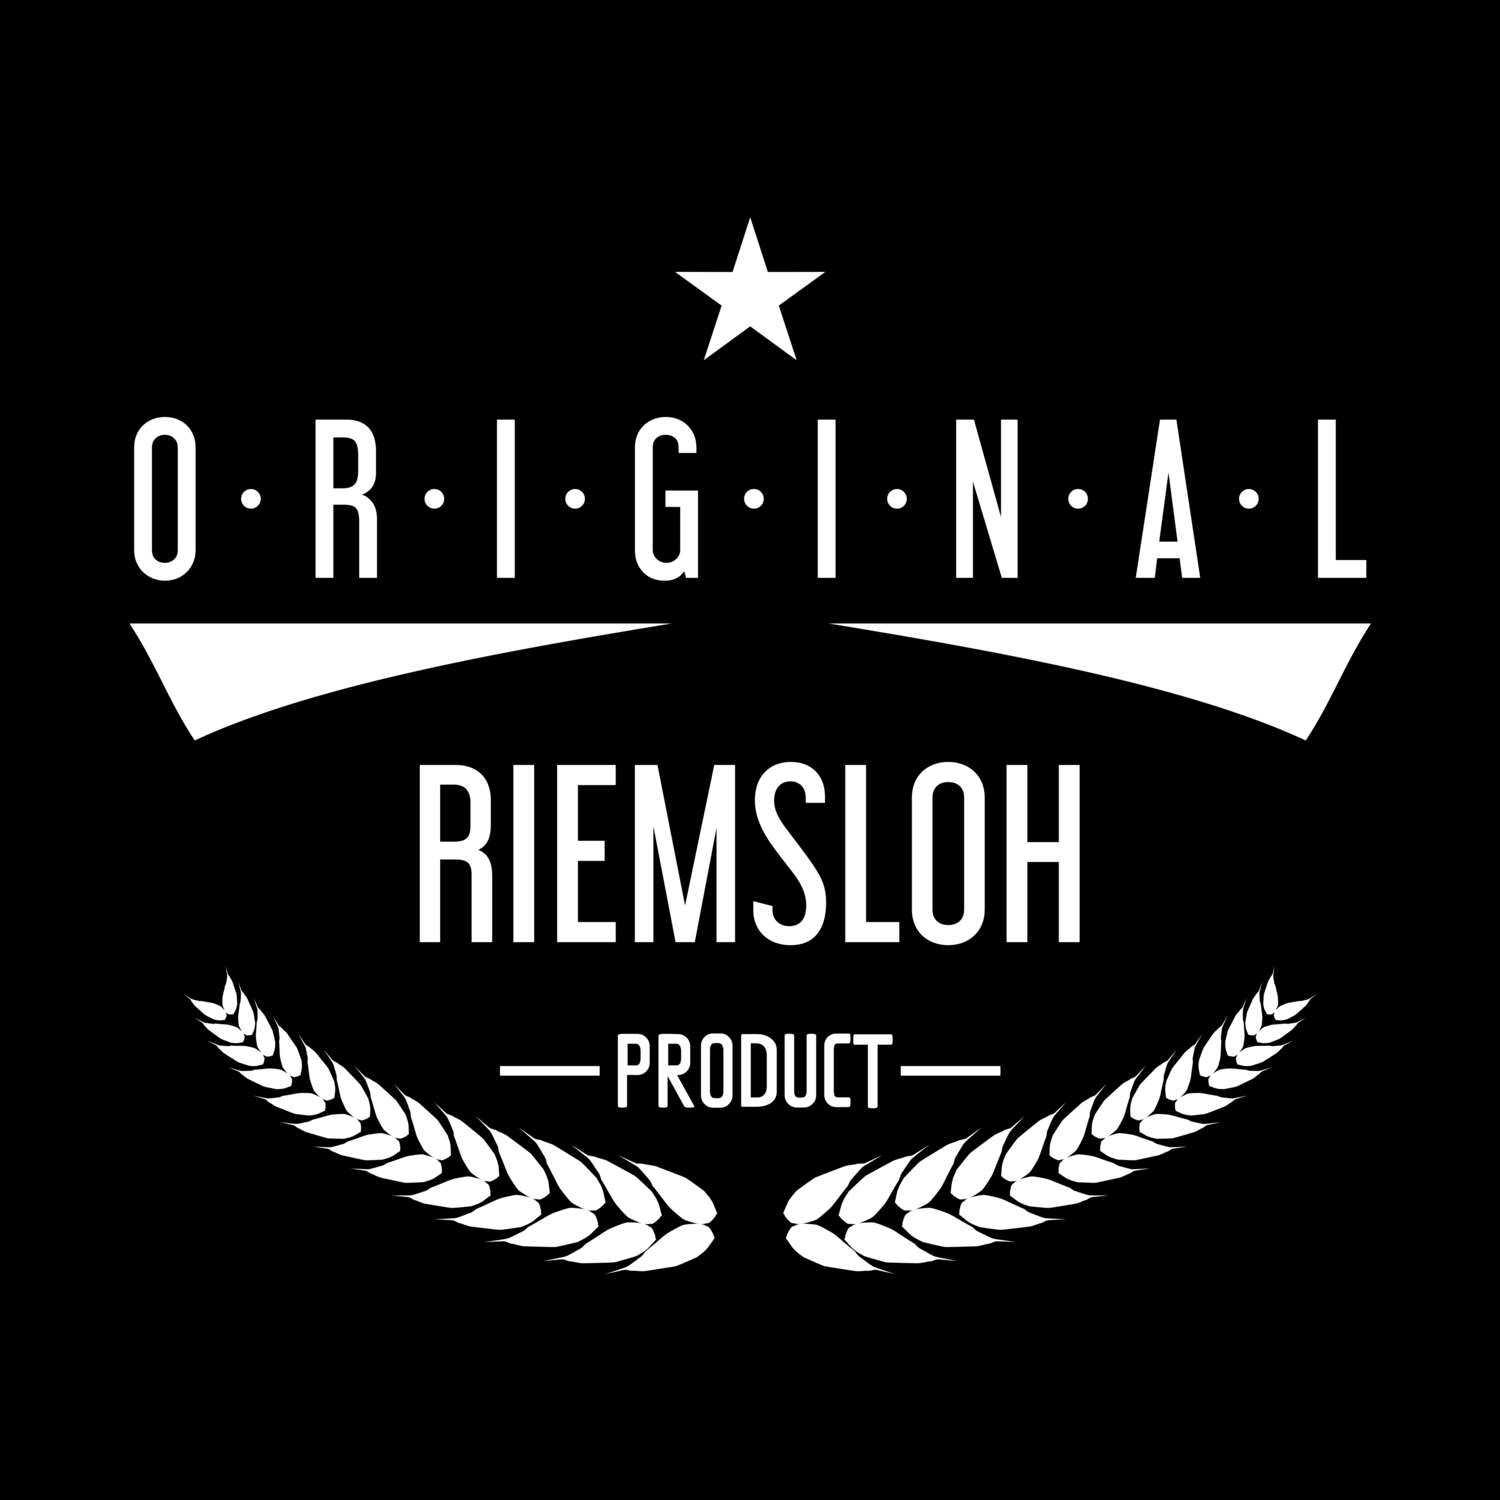 Riemsloh T-Shirt »Original Product«